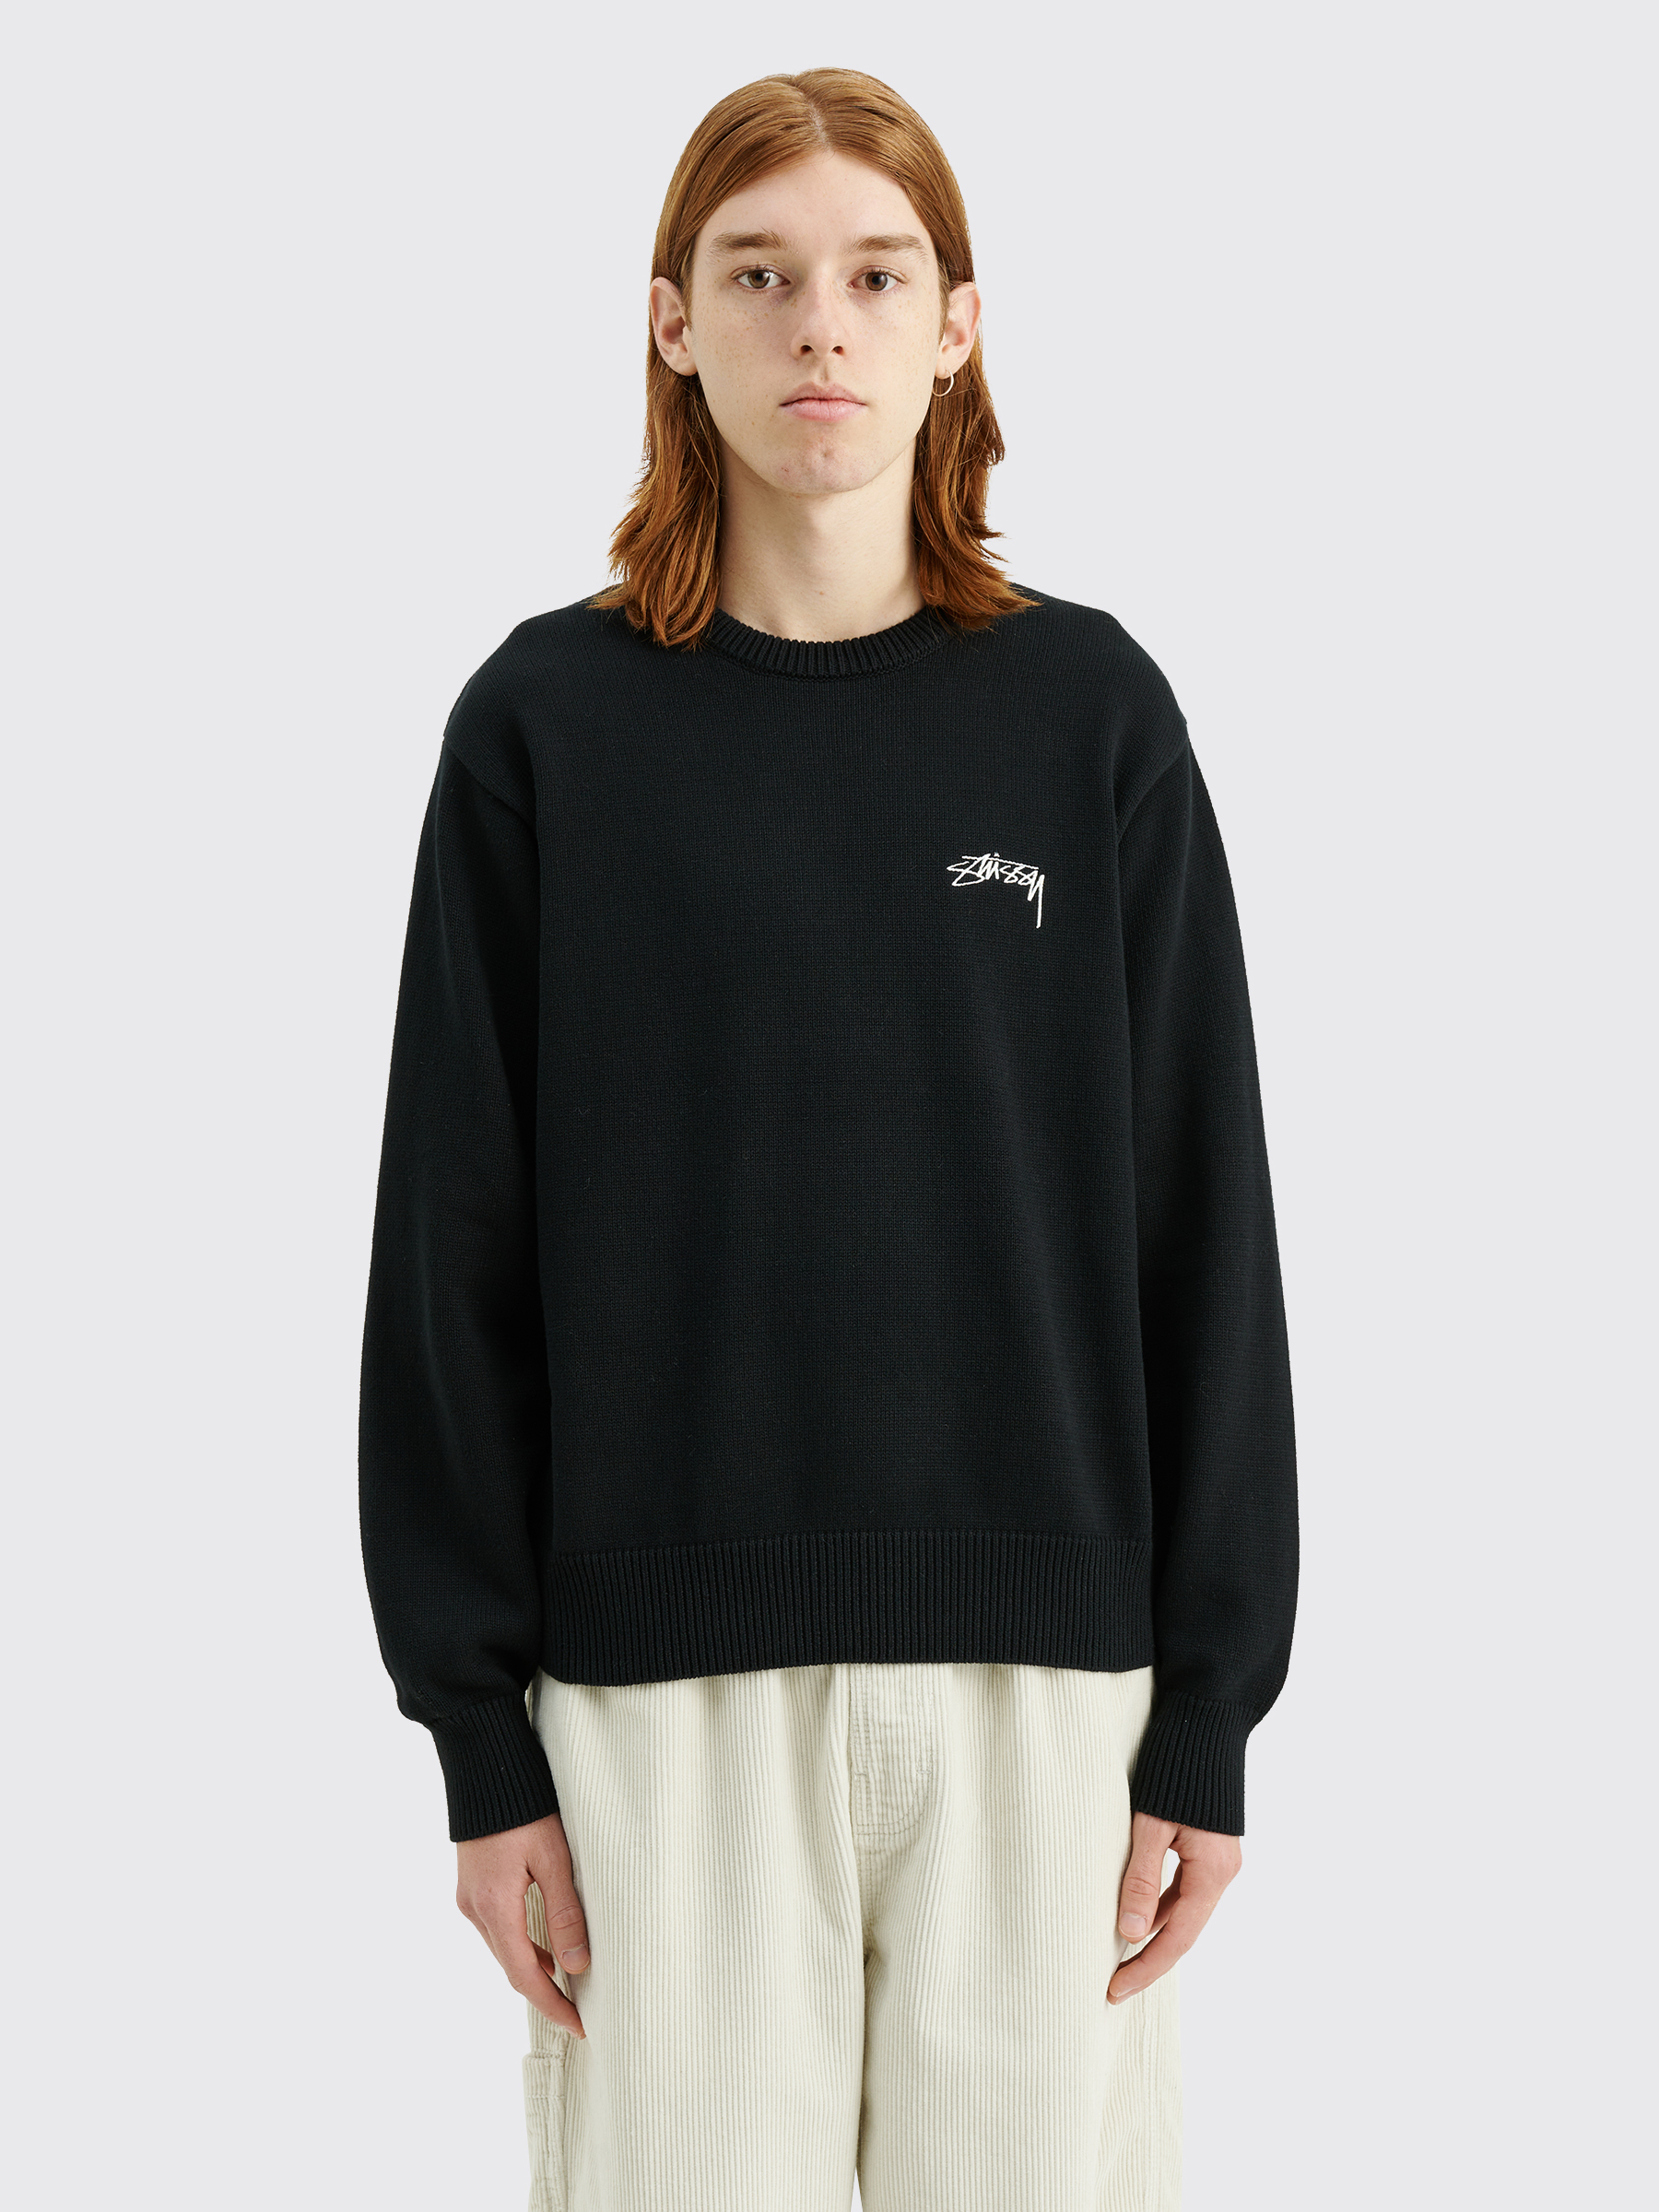 Très Bien - Stüssy Care Label Sweater Black